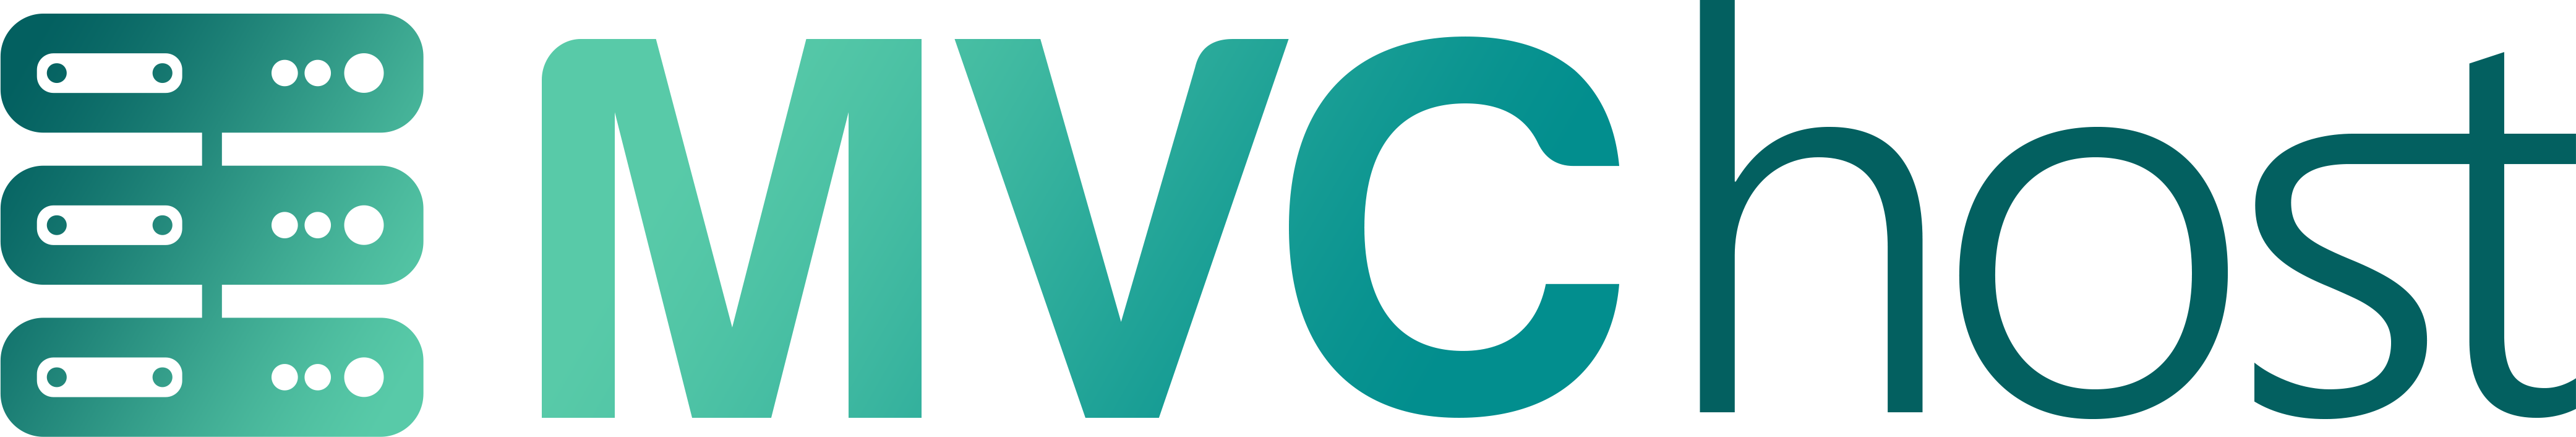 MVC Host